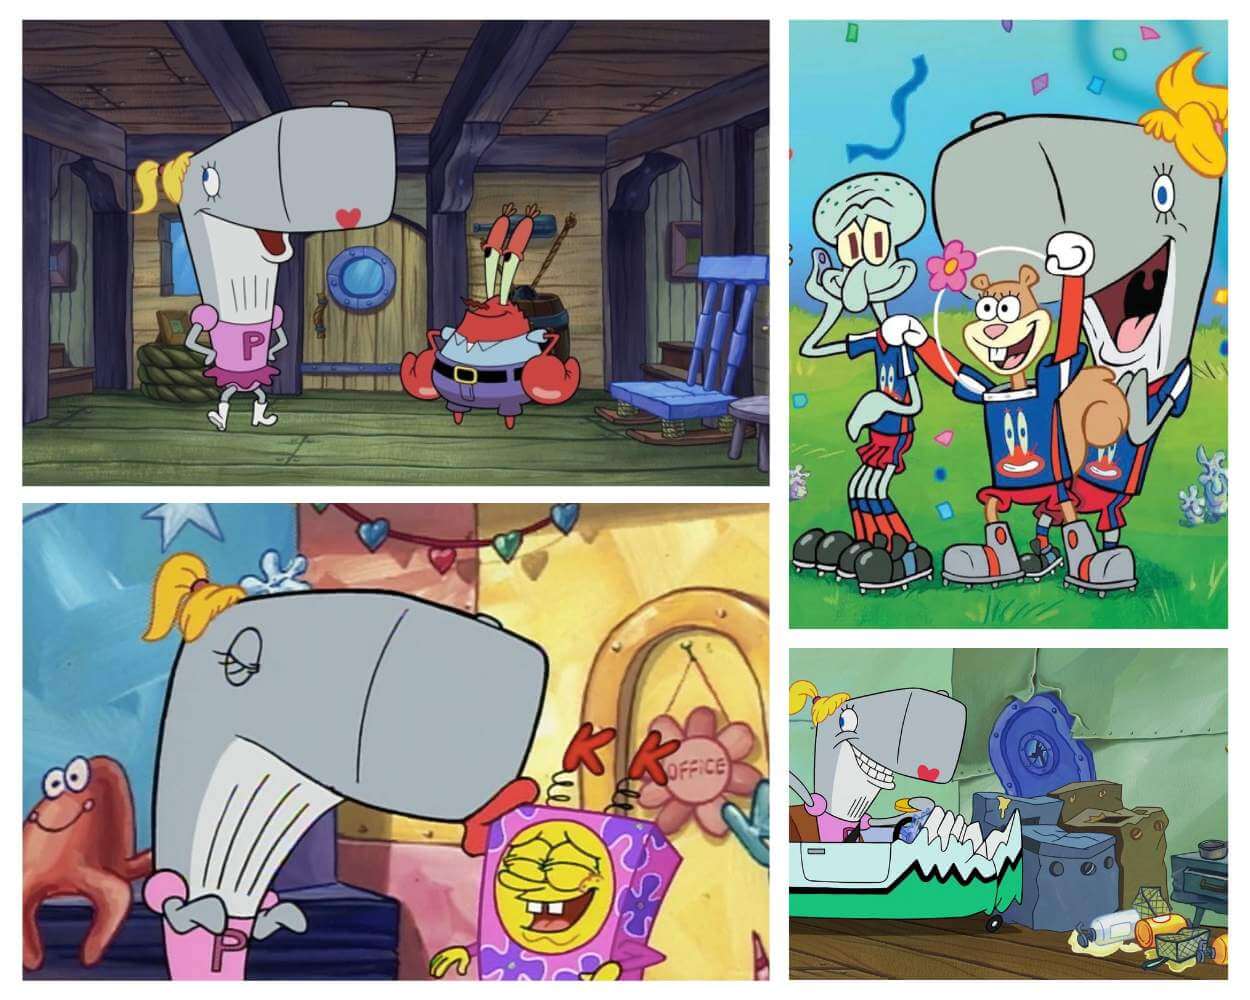 Pearl Krabs Character From Spongebob